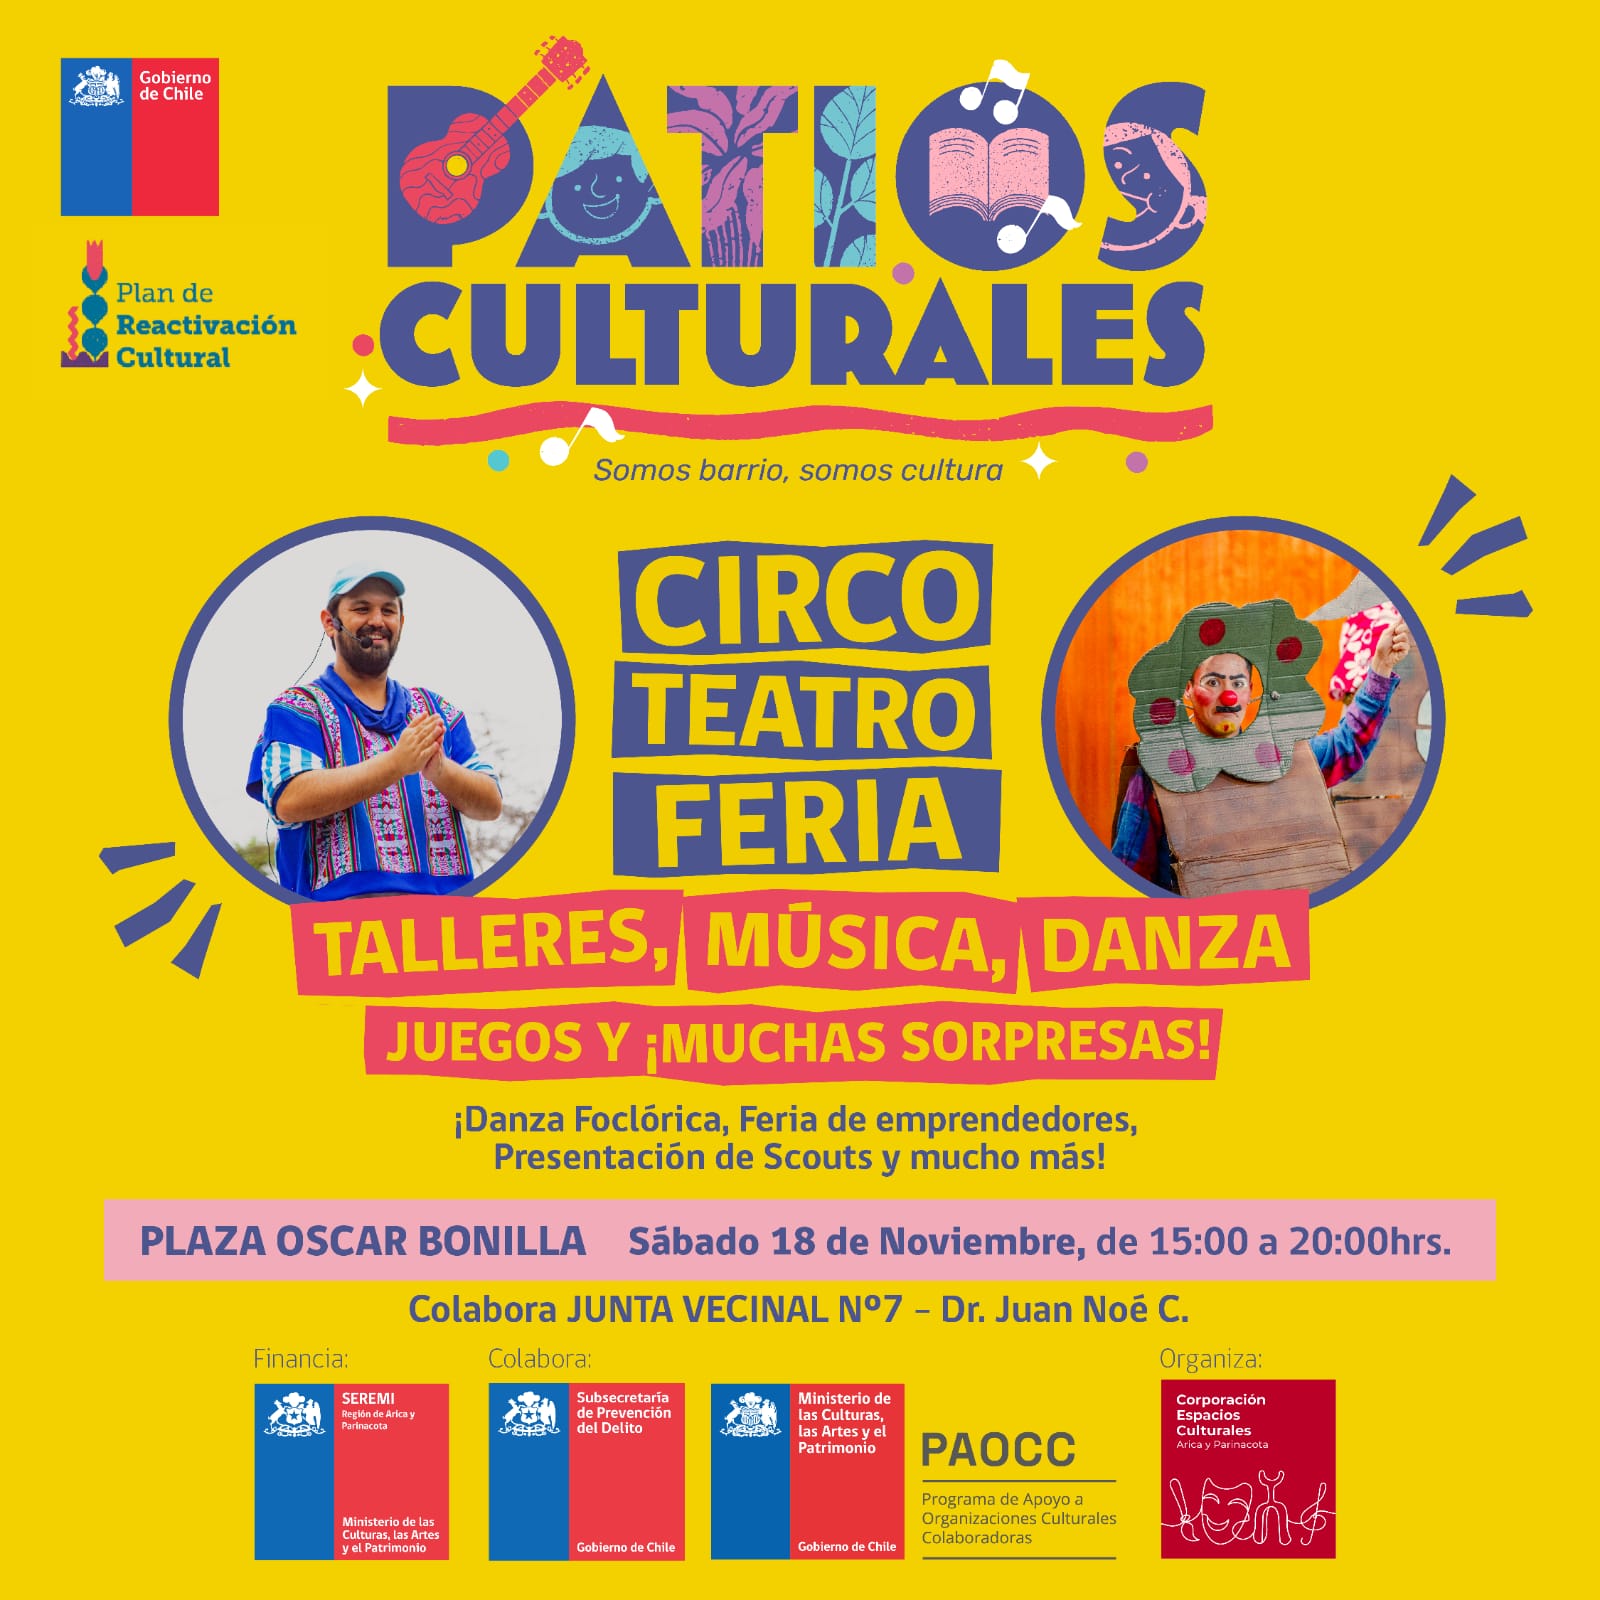 Patios Culturales Circo Teatro Feria